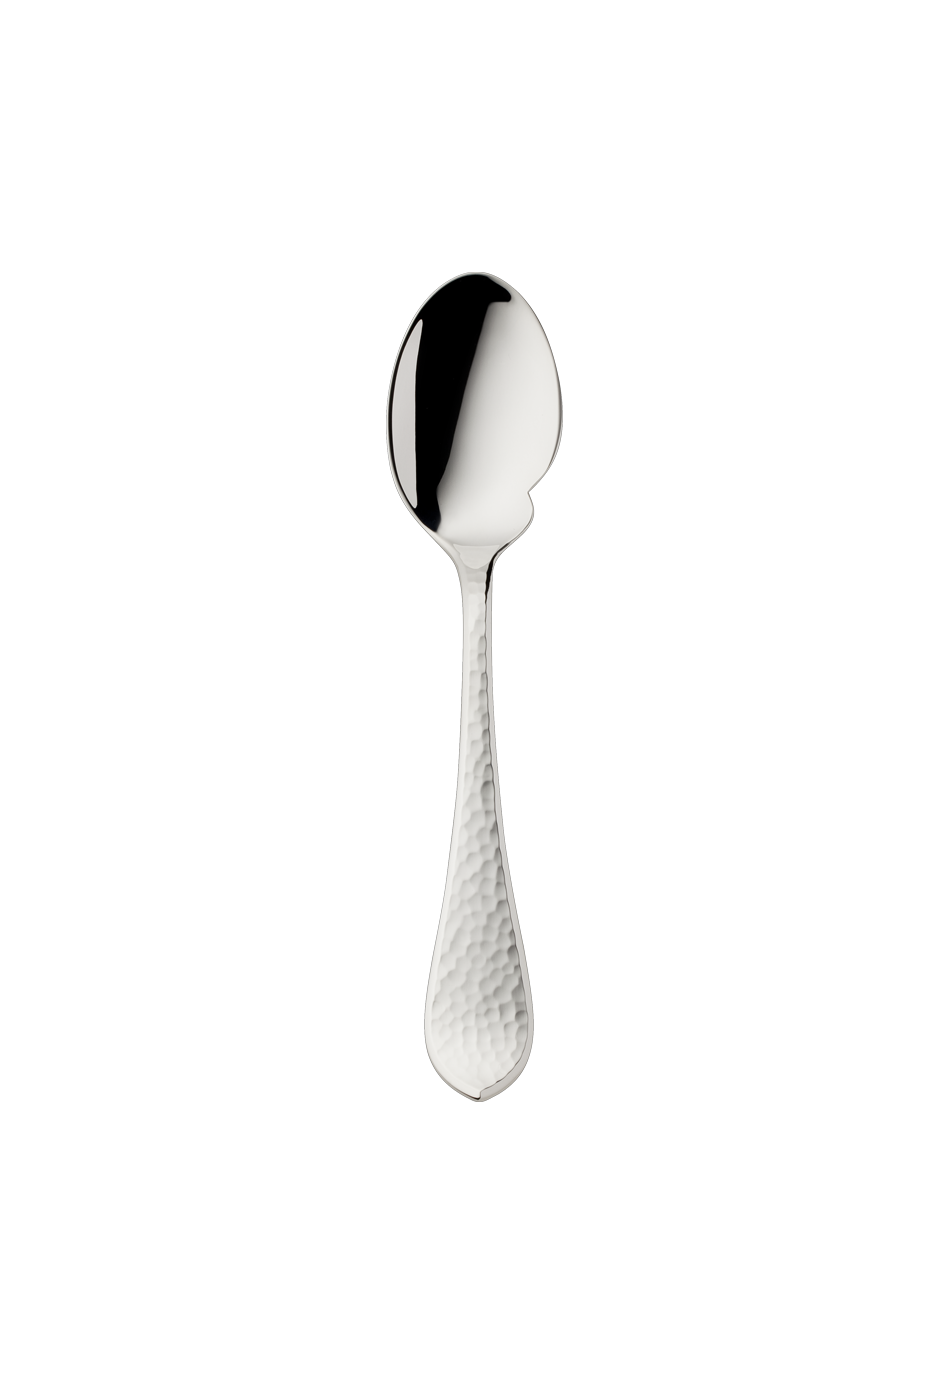 Martelé Gourmet spoon (150g massive silverplated)